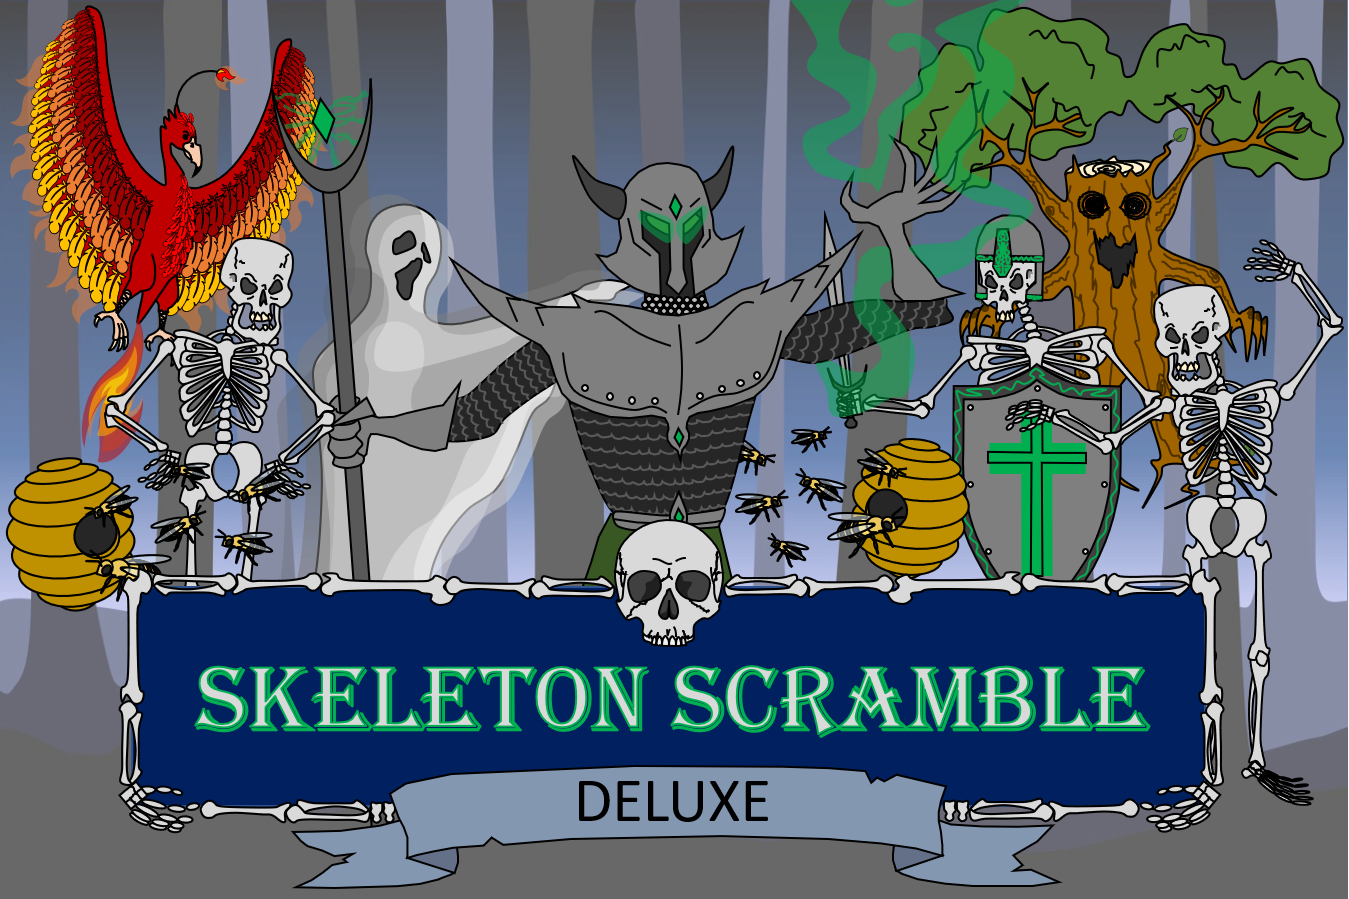 Skeleton Scramble Deluxe